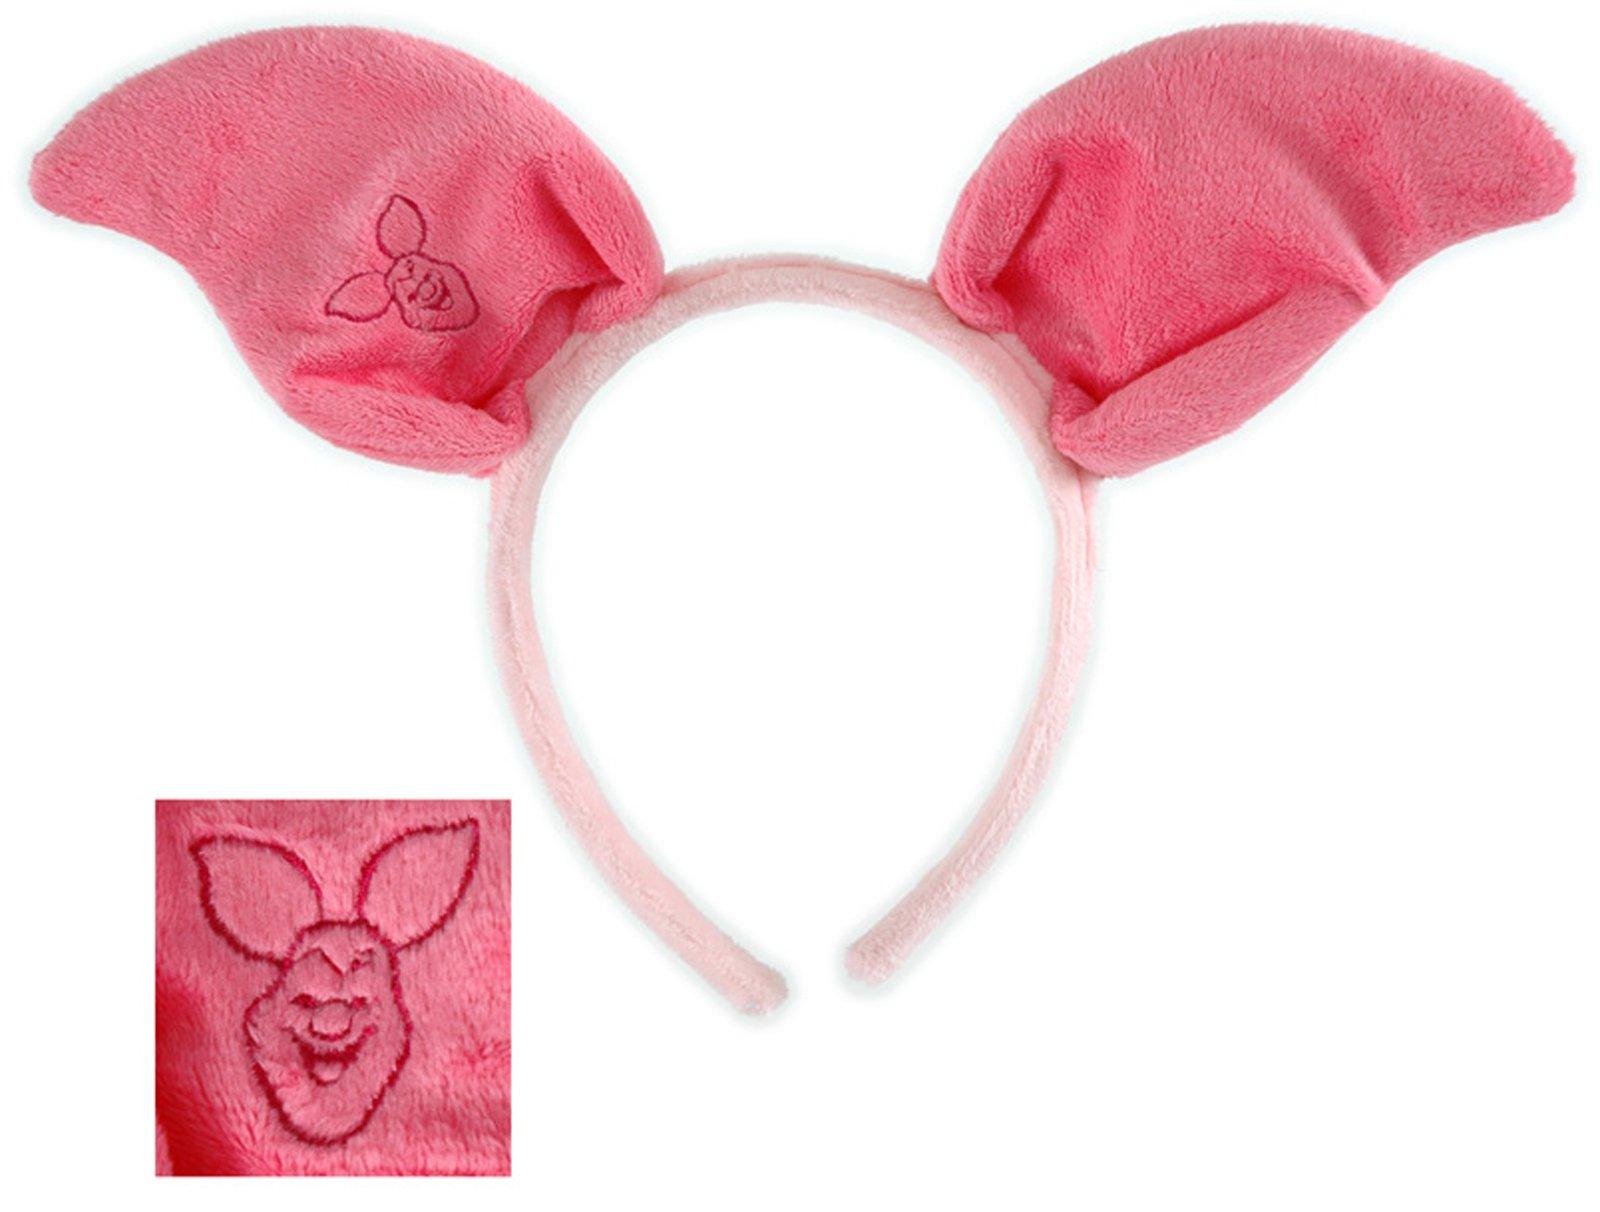 piglet-ears-template